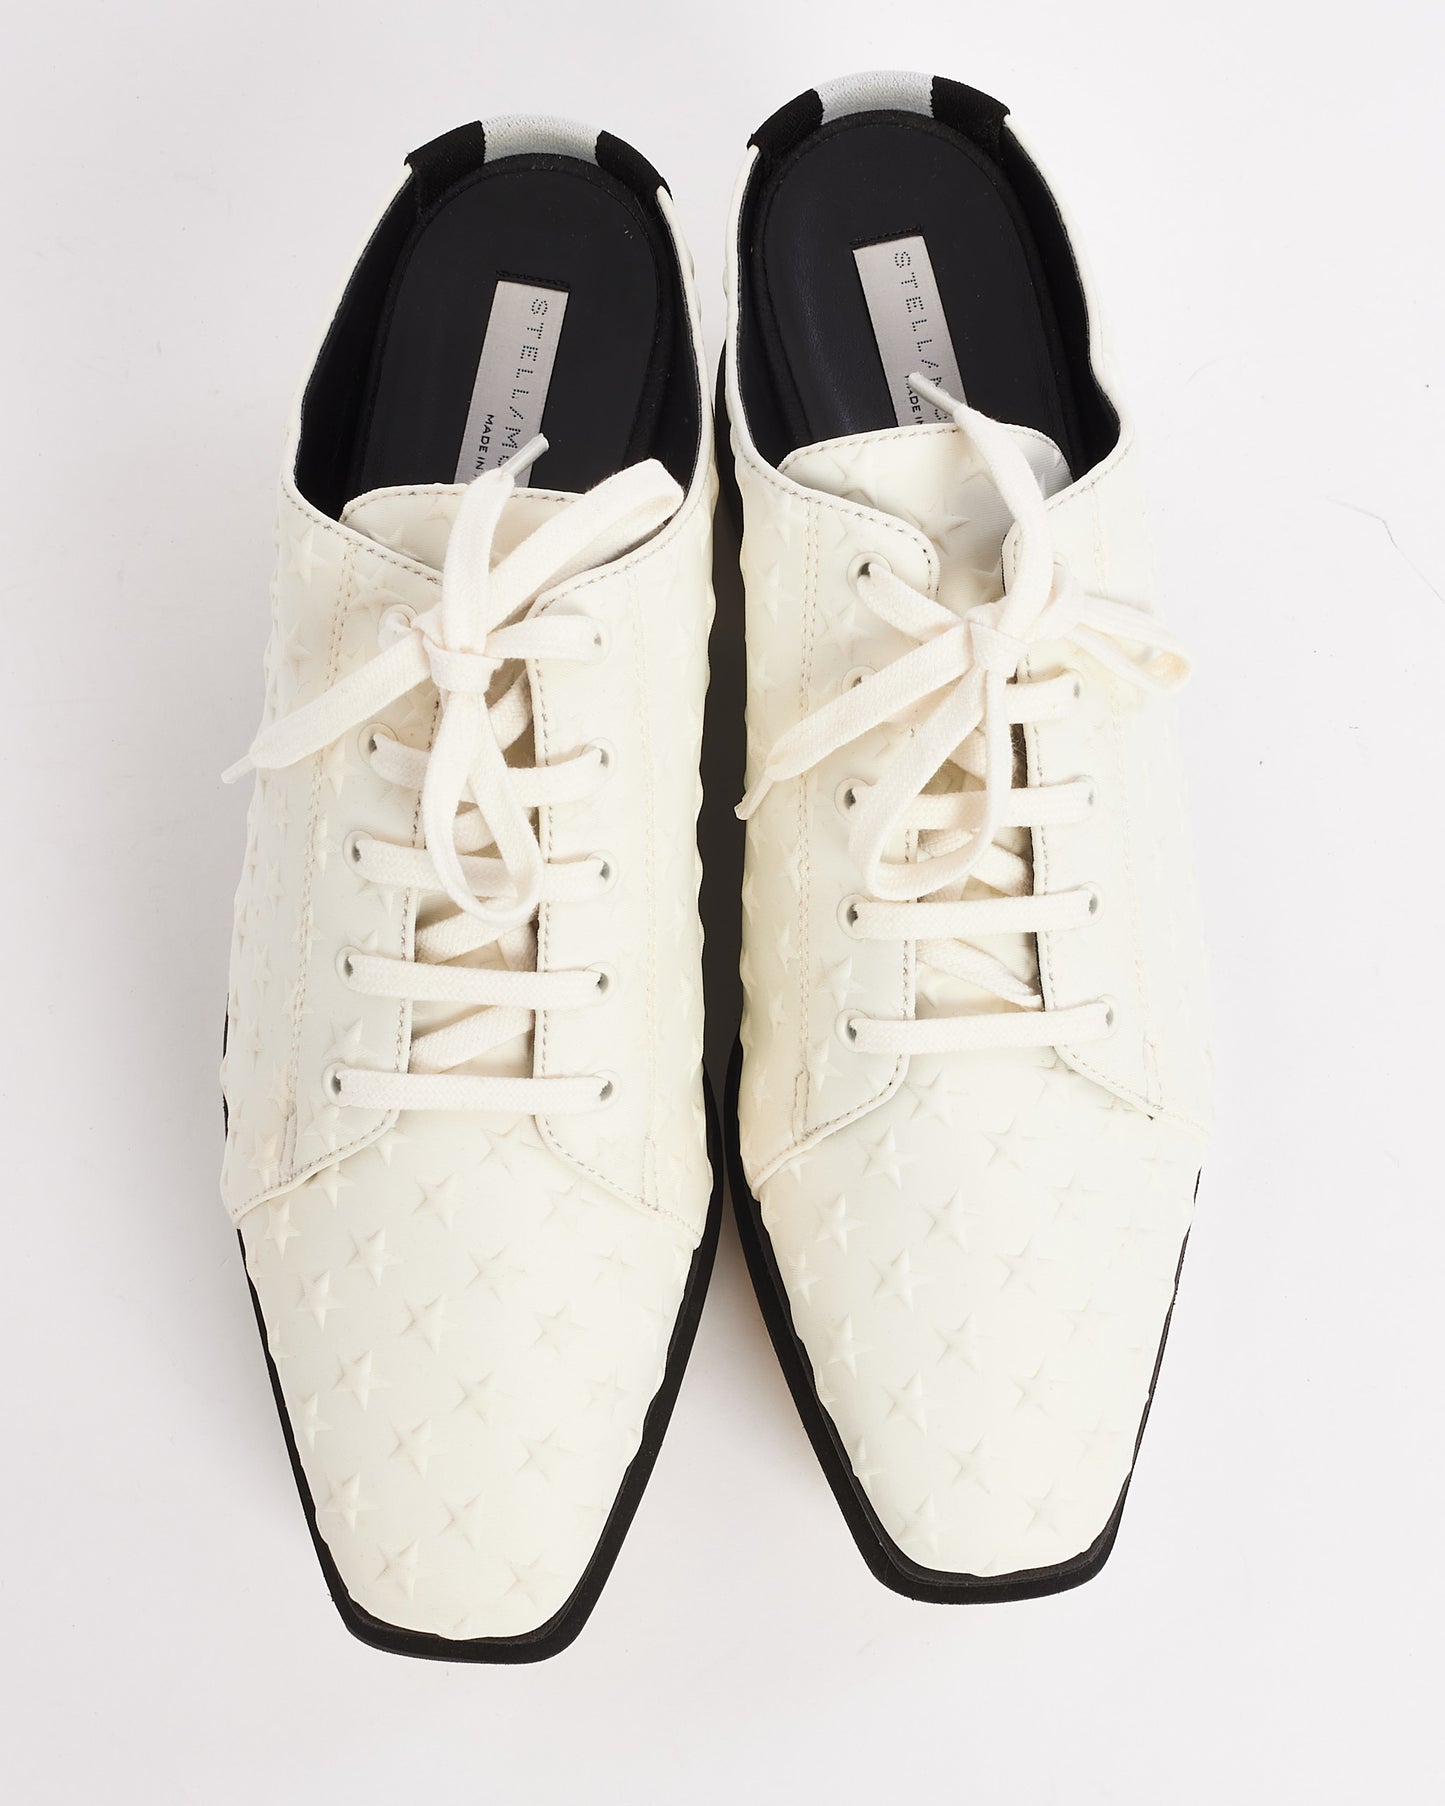 Stella McCartney White Leather Elyse Platform Sneaker Mules - 40